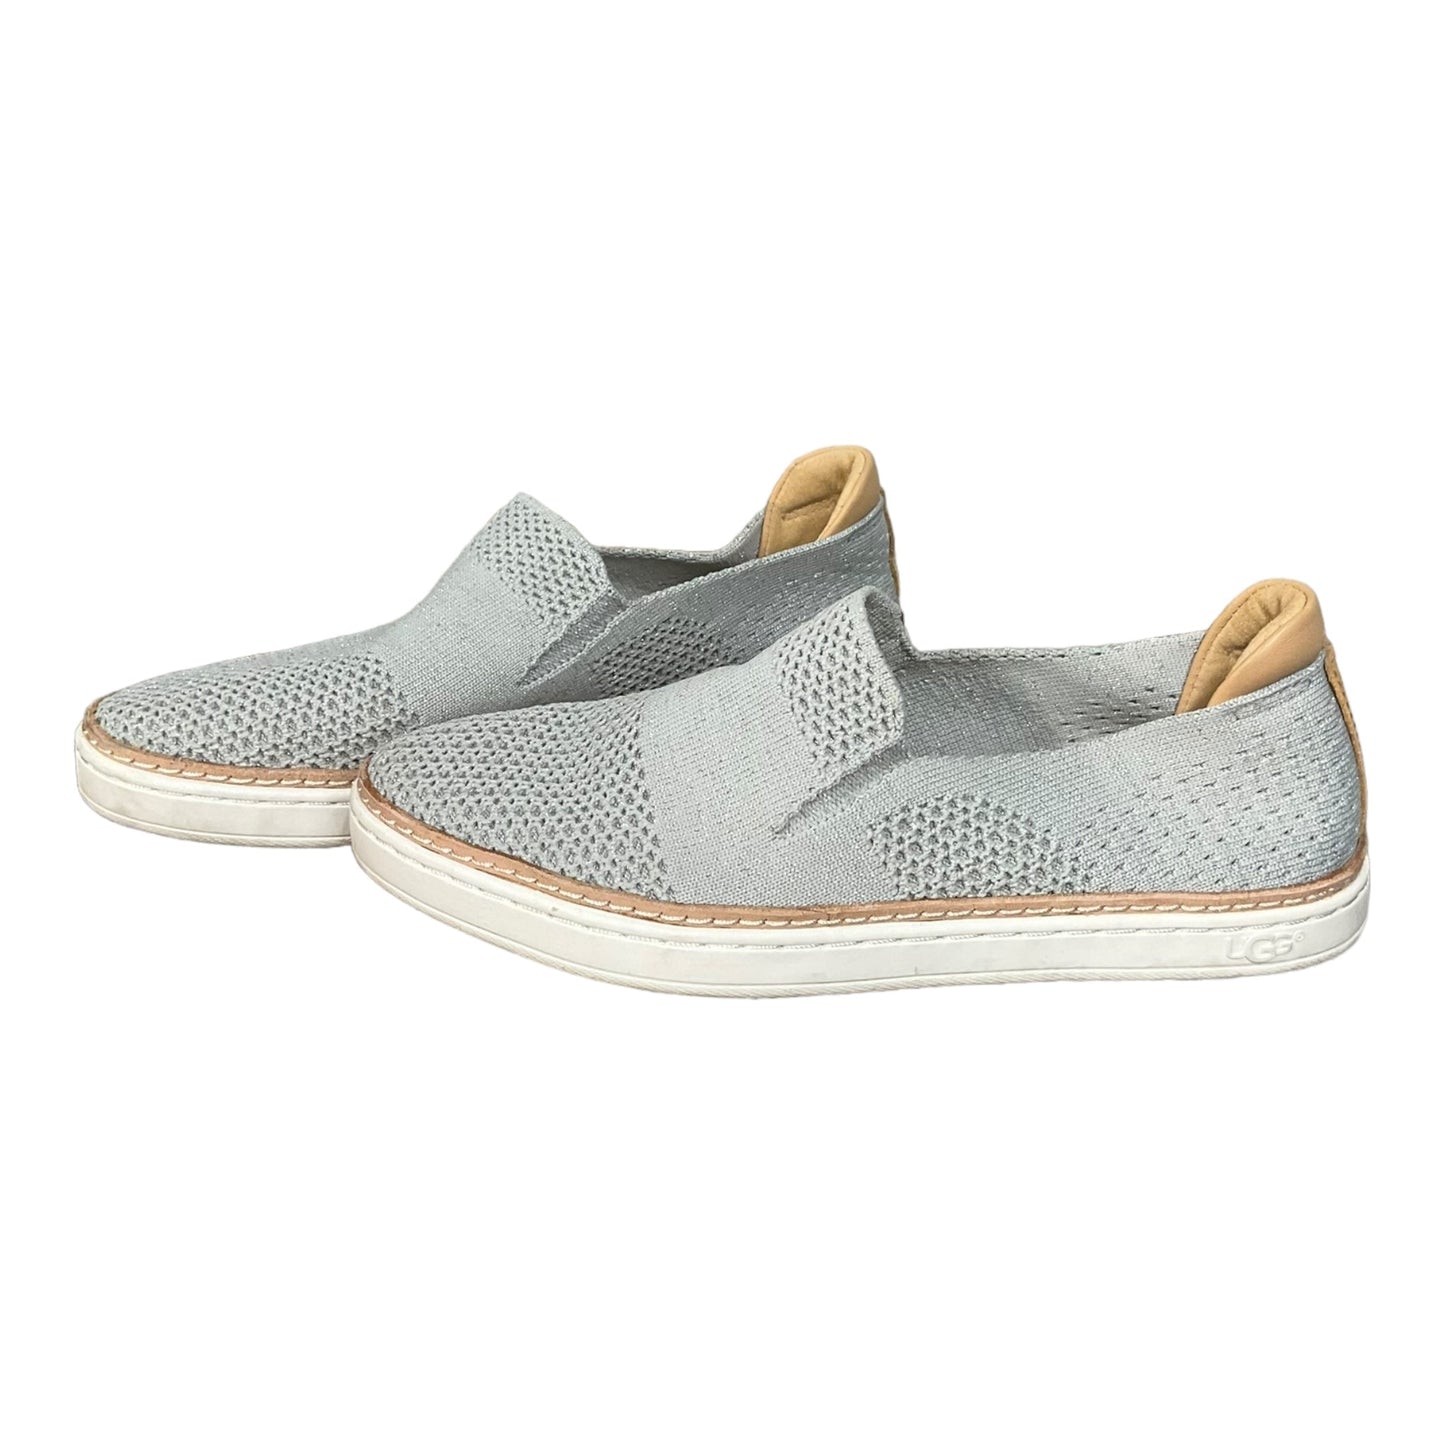 Grey Shoes Flats Ugg, Size 6